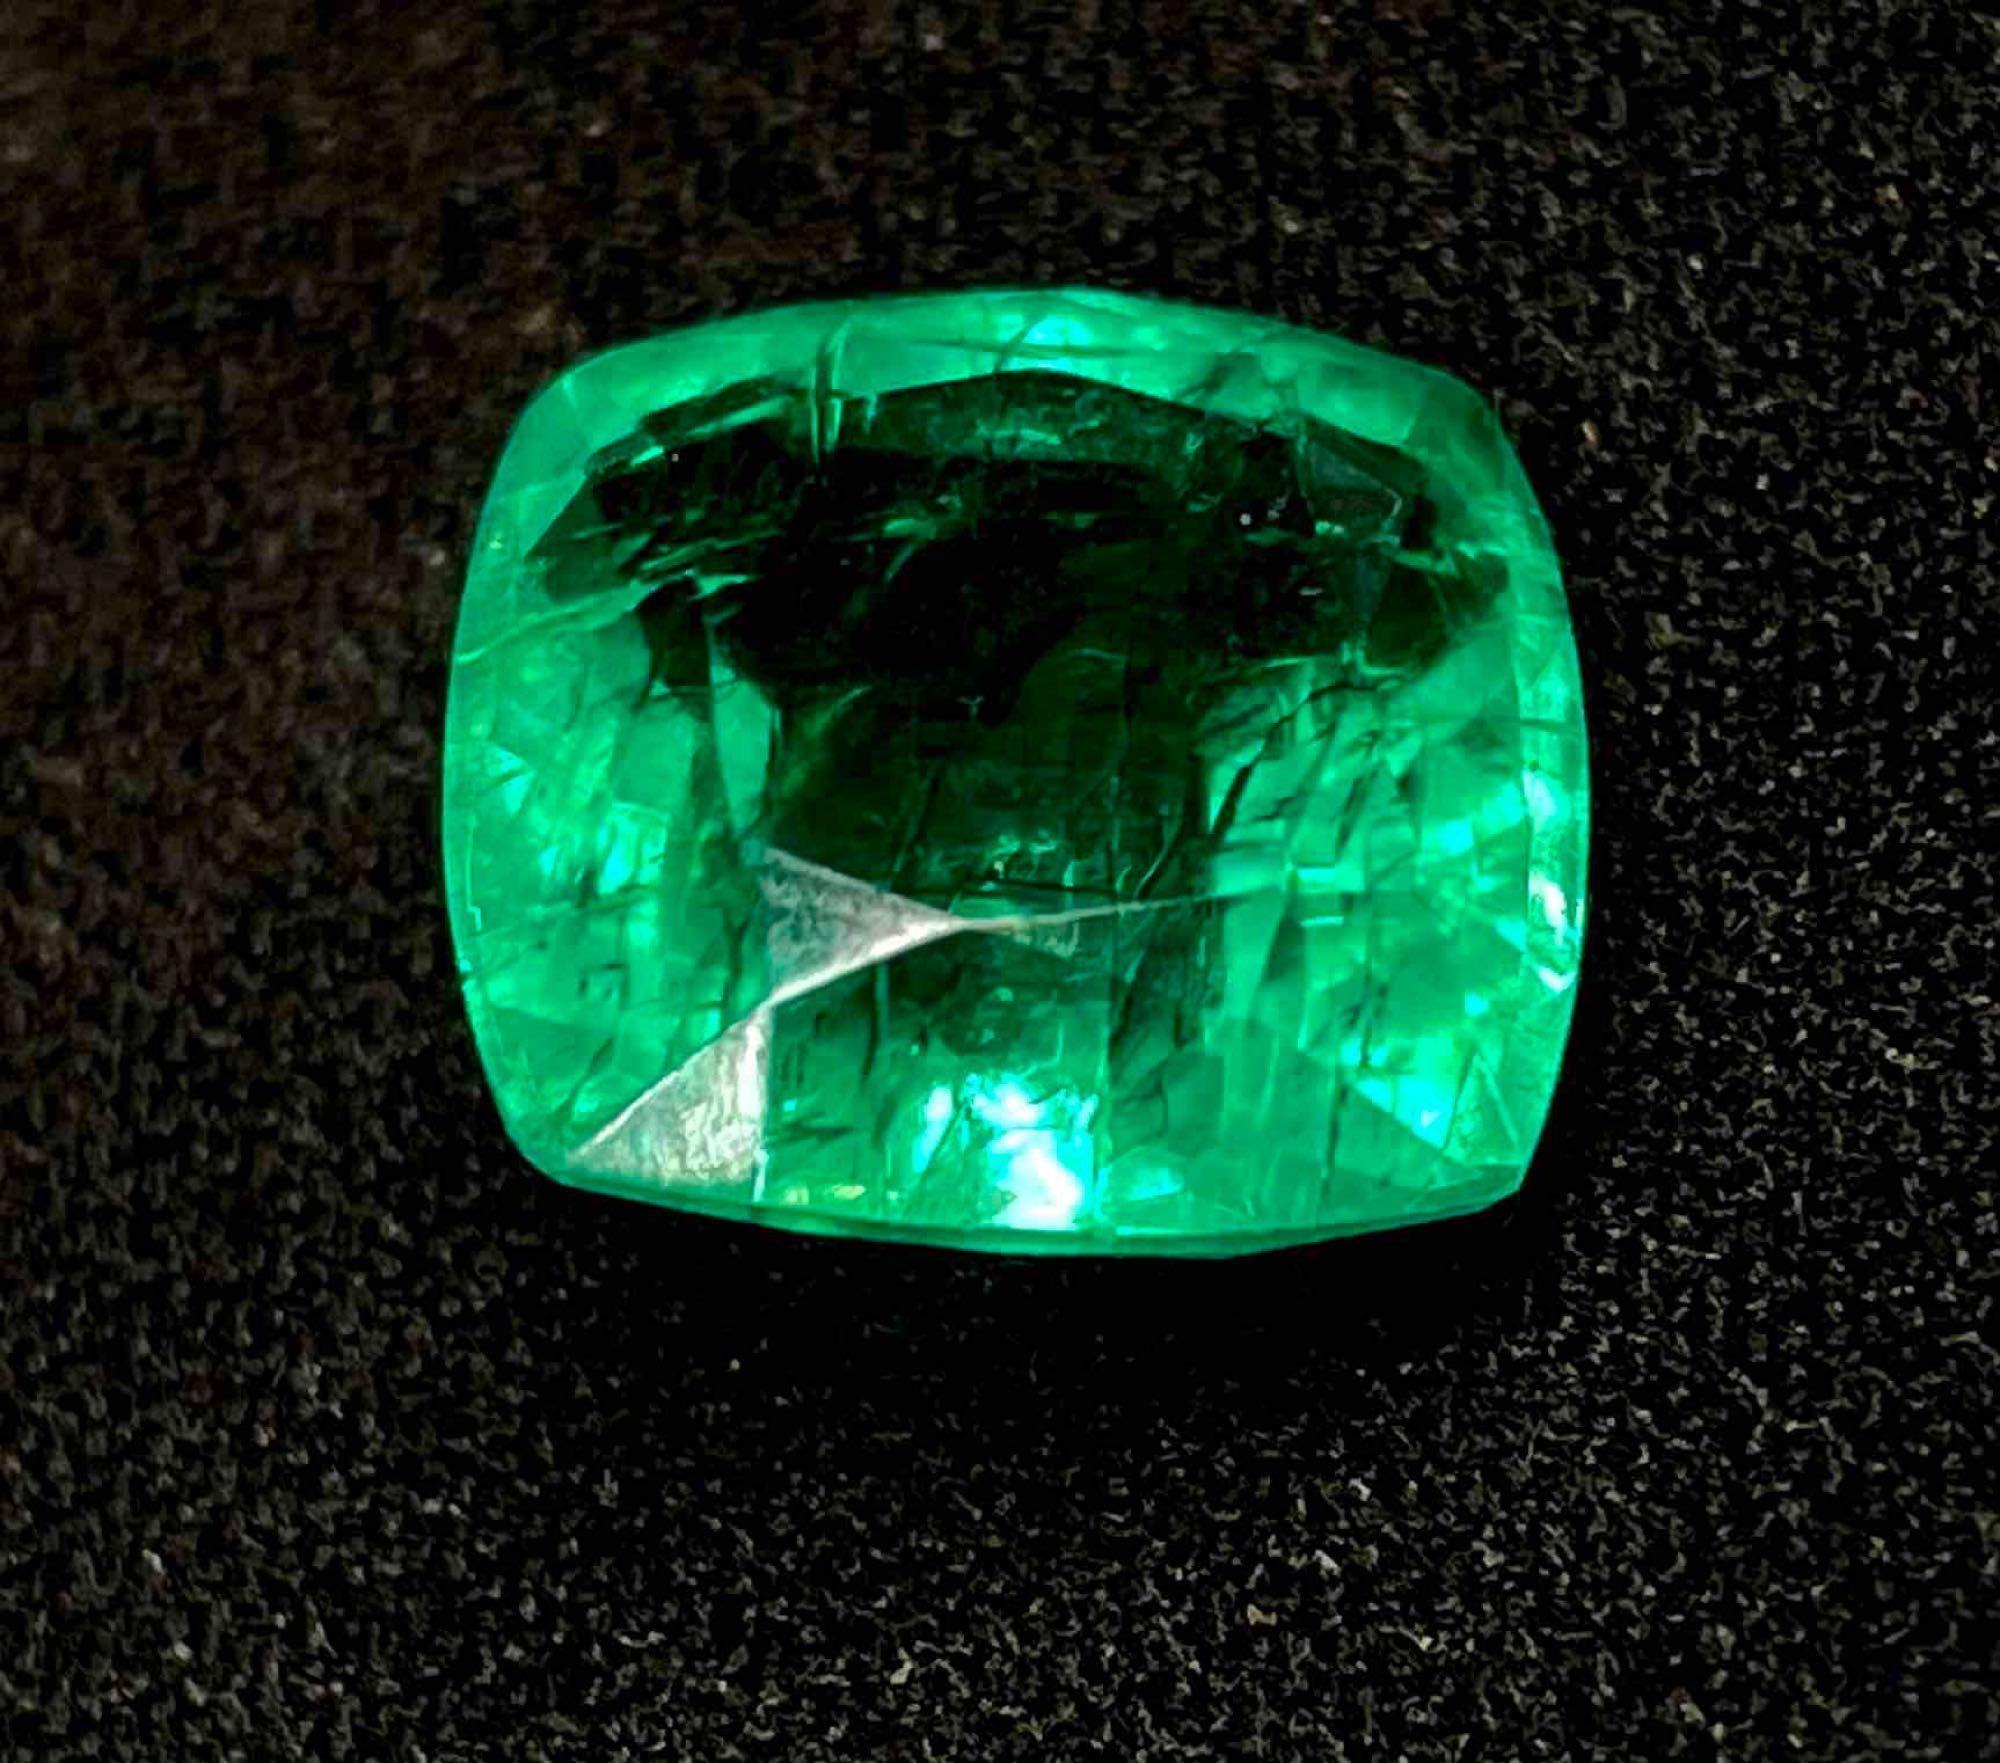 Magnificent 7.16ct Square Cut Vivid Bright Green Emerald Gemstone. Brilliant Glows like Kryptonite!